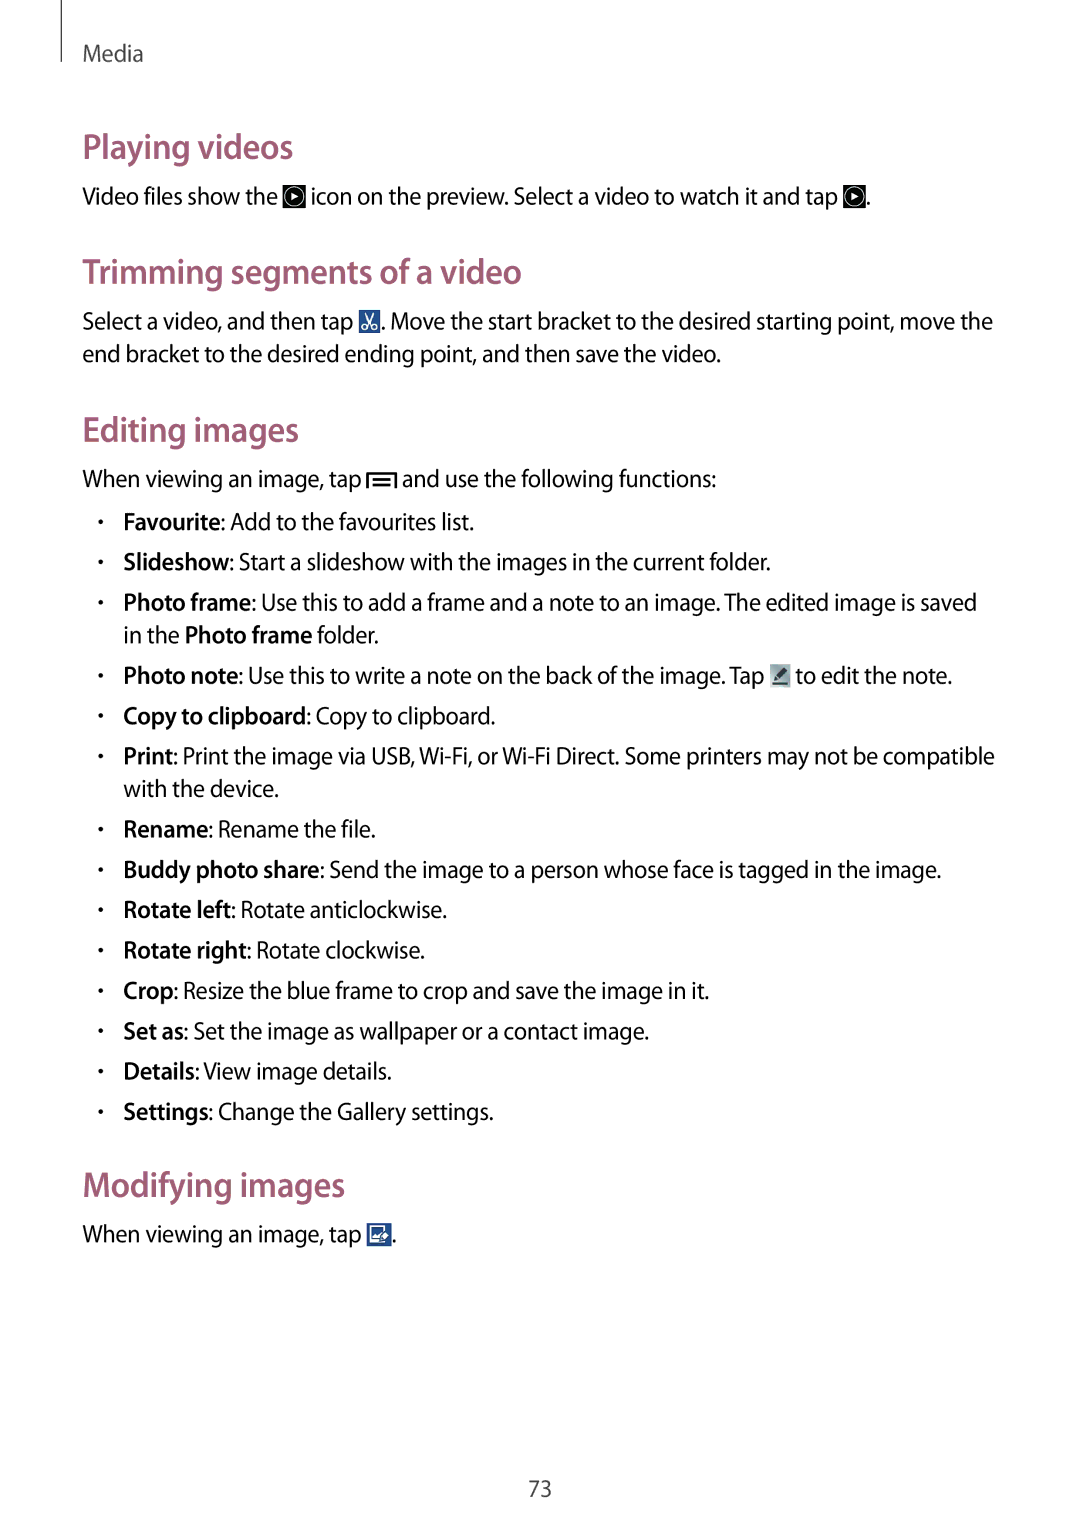 Samsung SM-G386FZKASEB, SM-G386FZKAPRT manual Playing videos, Trimming segments of a video, Editing images, Modifying images 